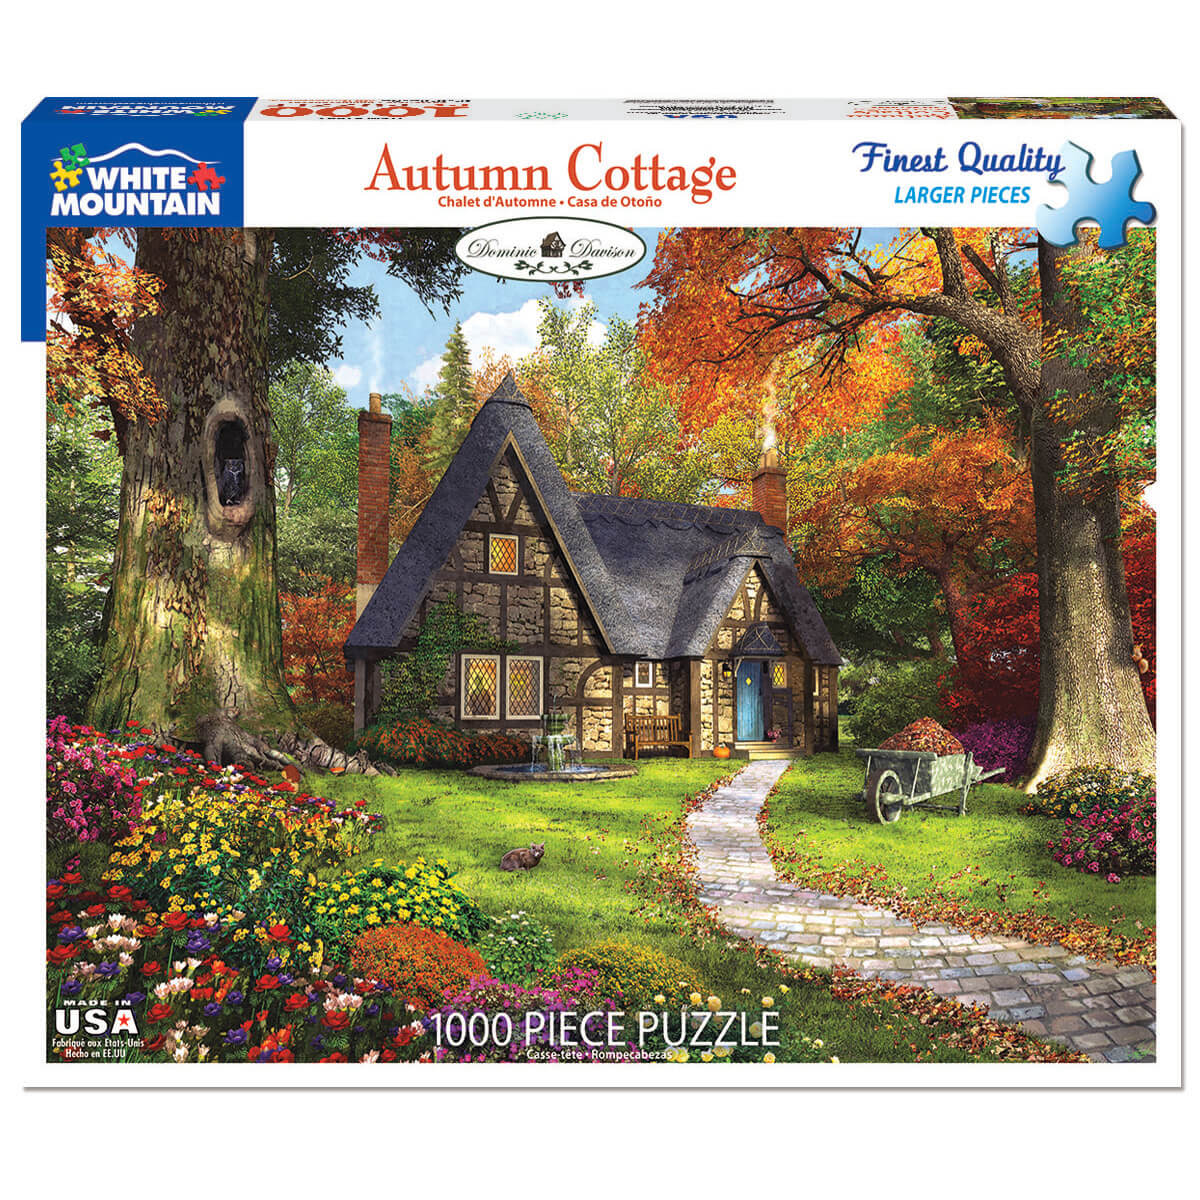 White Mountain Puzzles Autumn Cottage 1000 Piece Jigsaw Puzzle